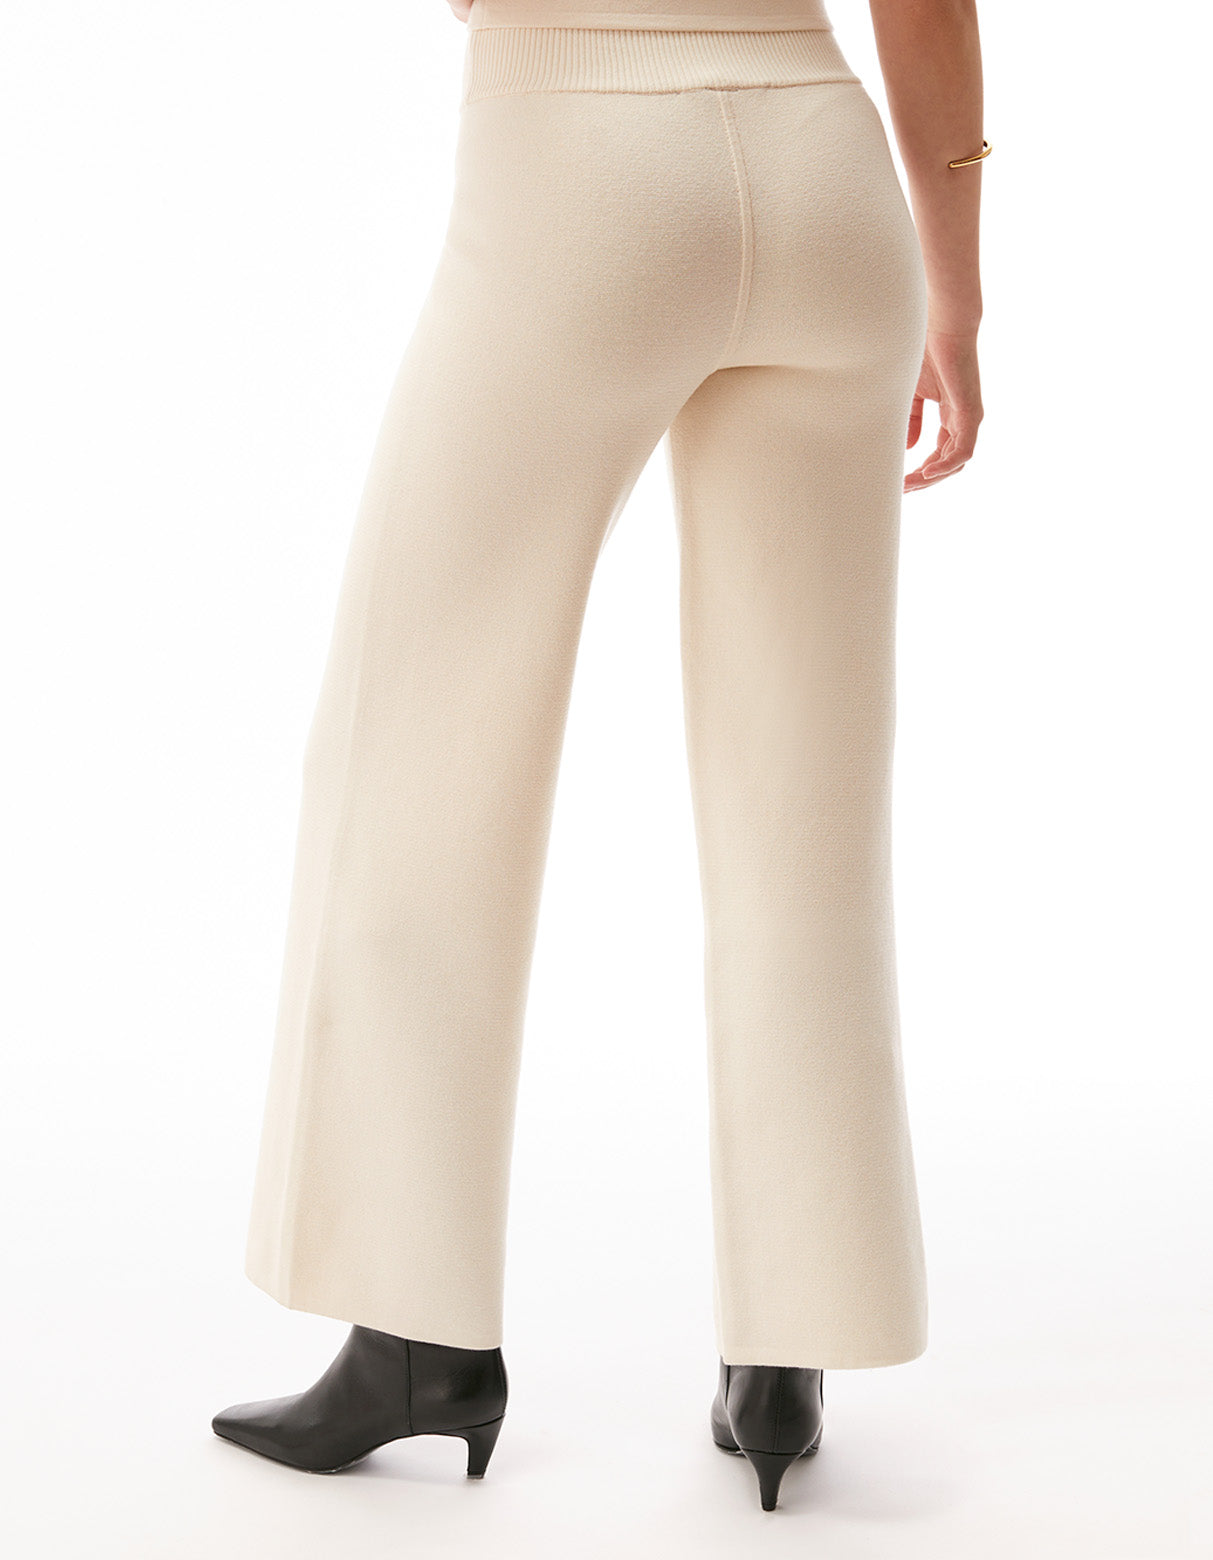 marla boot cut pant pull on knit off white cream - flattering designer fashion resortwear brunch pants for women